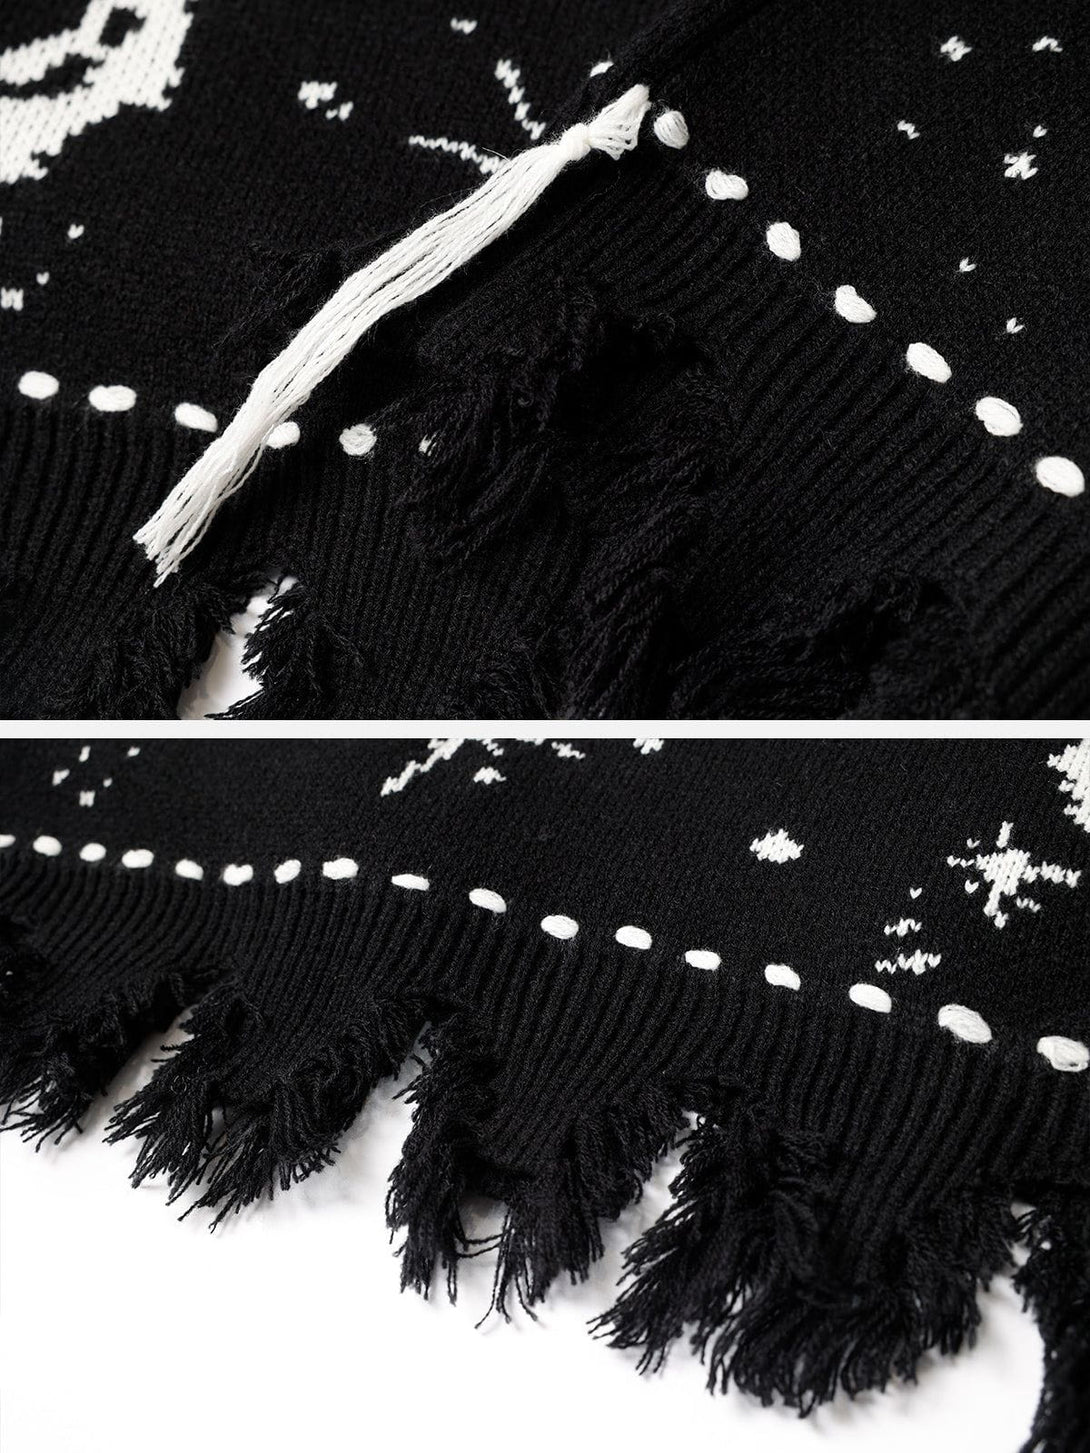 AlanBalen® - Starry Night Swirl Graphic Sweater Vest AlanBalen